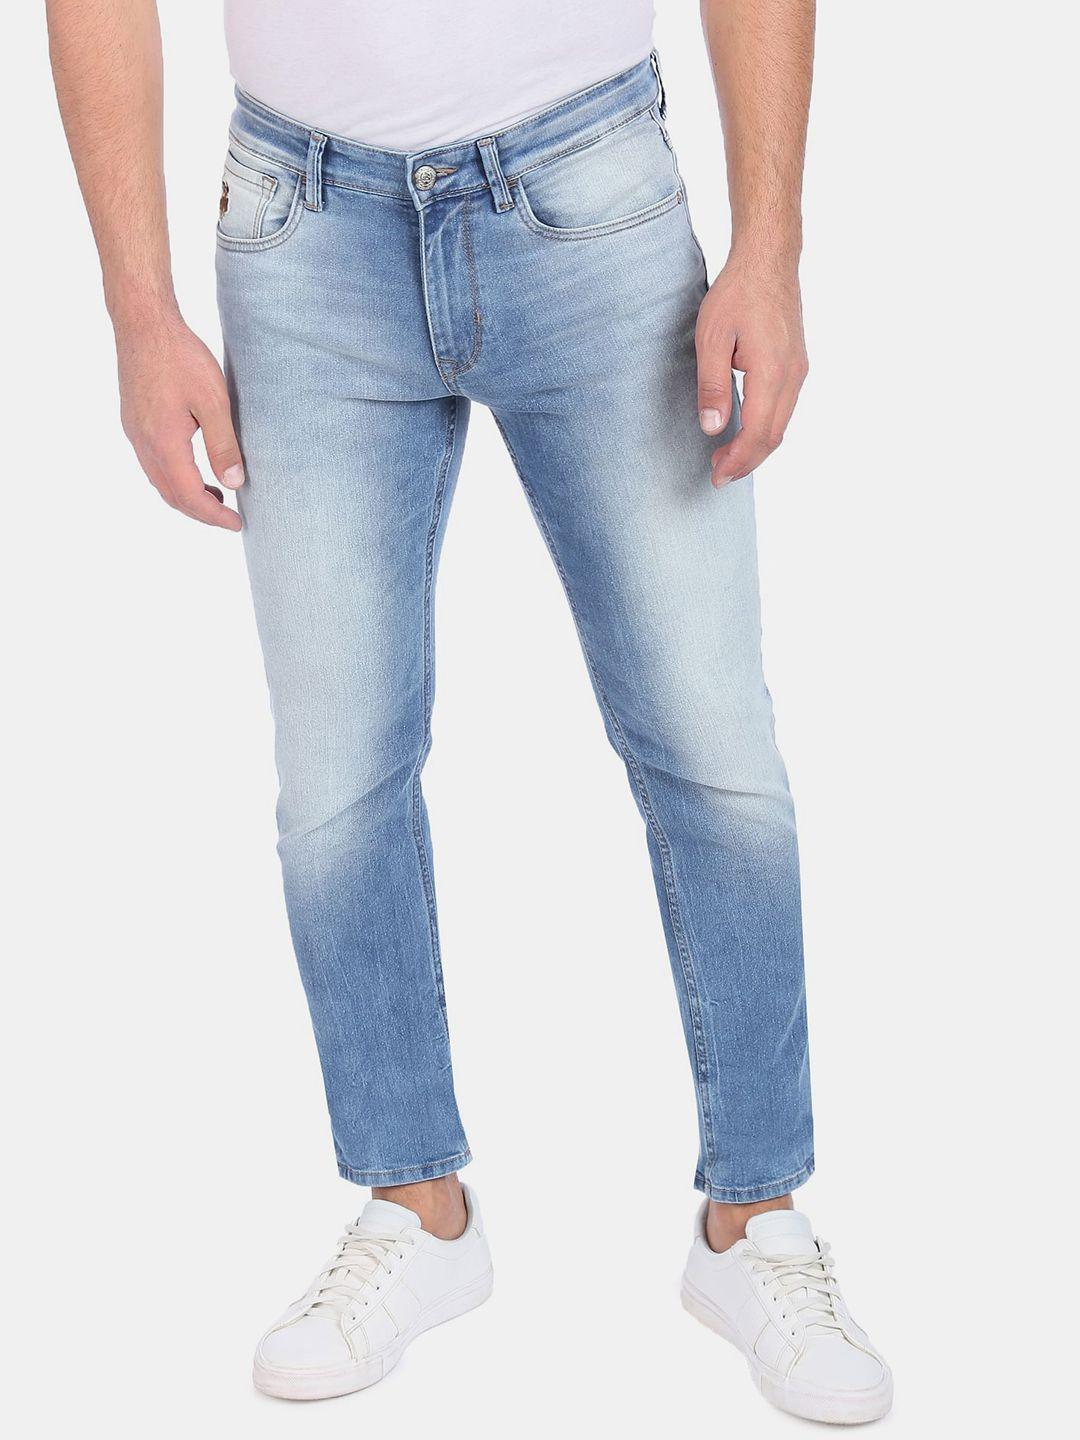 u.s. polo assn. denim co. men blue slim fit heavy fade jeans